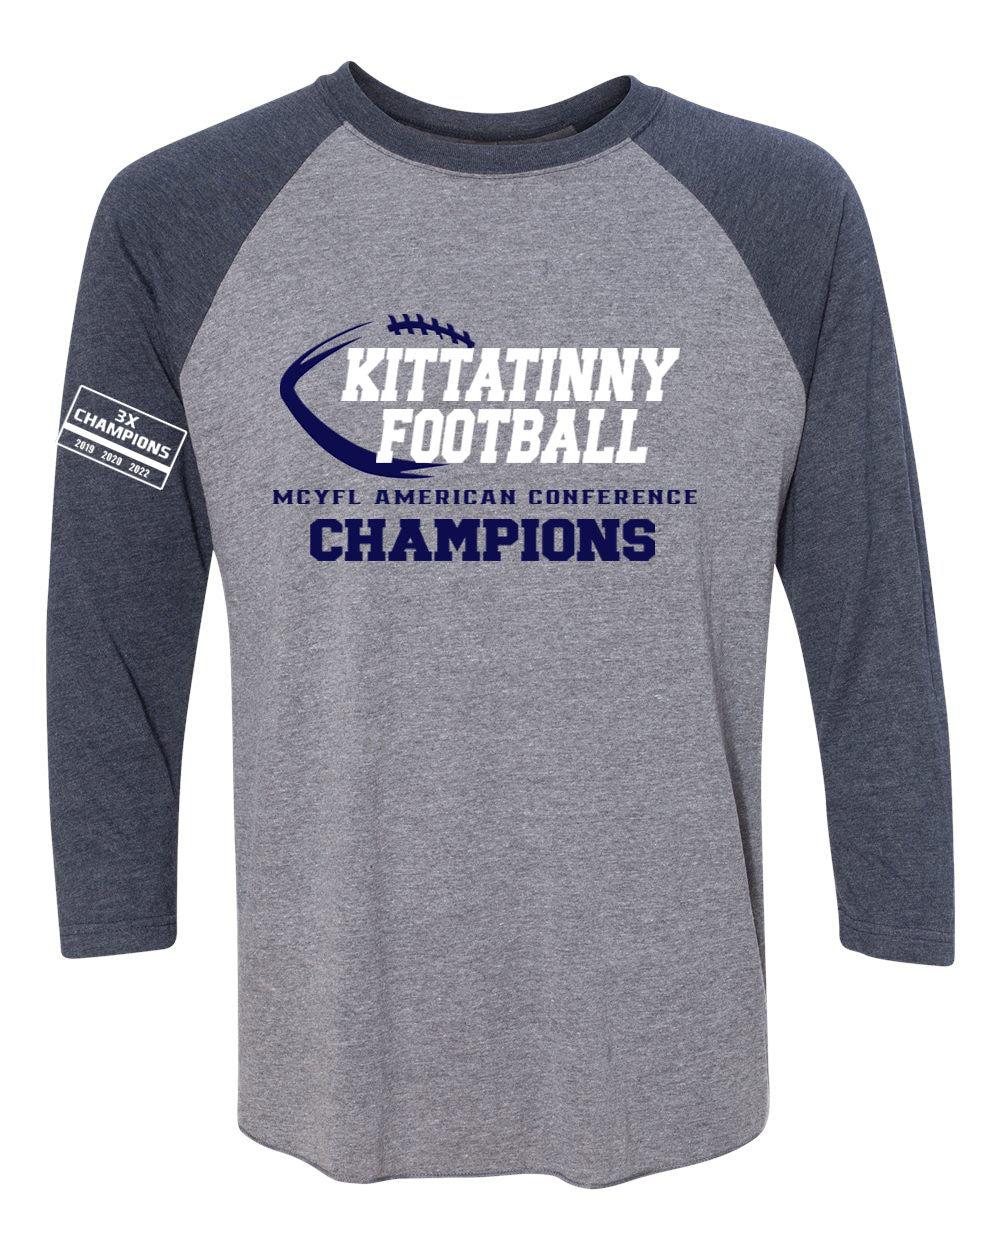 Kittatinny Football Champs raglan shirt